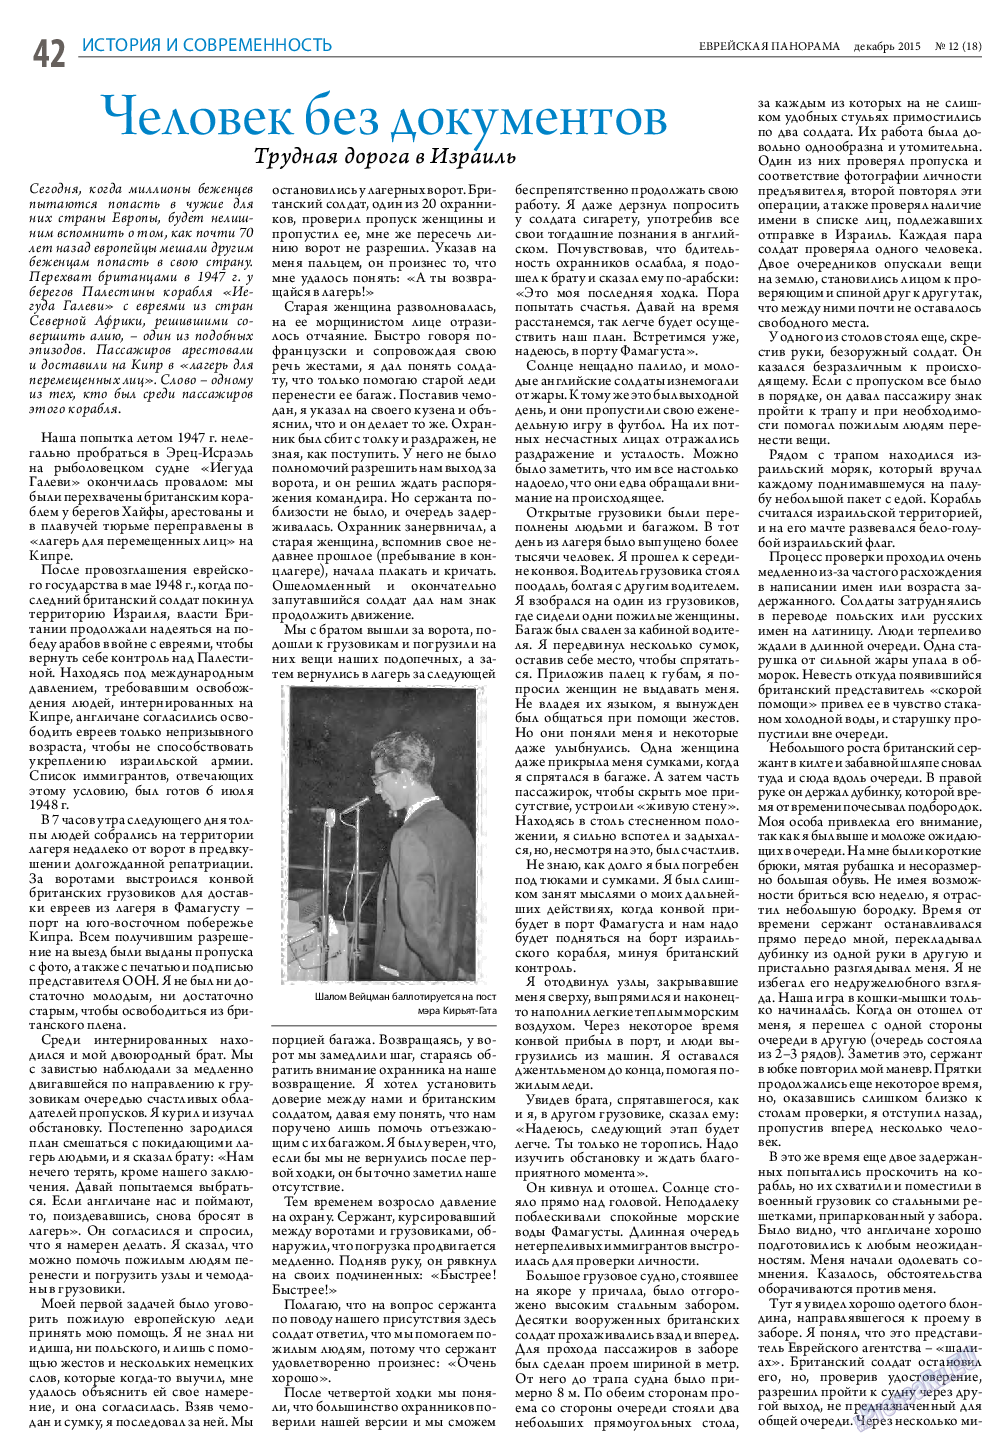 Еврейская панорама, газета. 2015 №12 стр.42